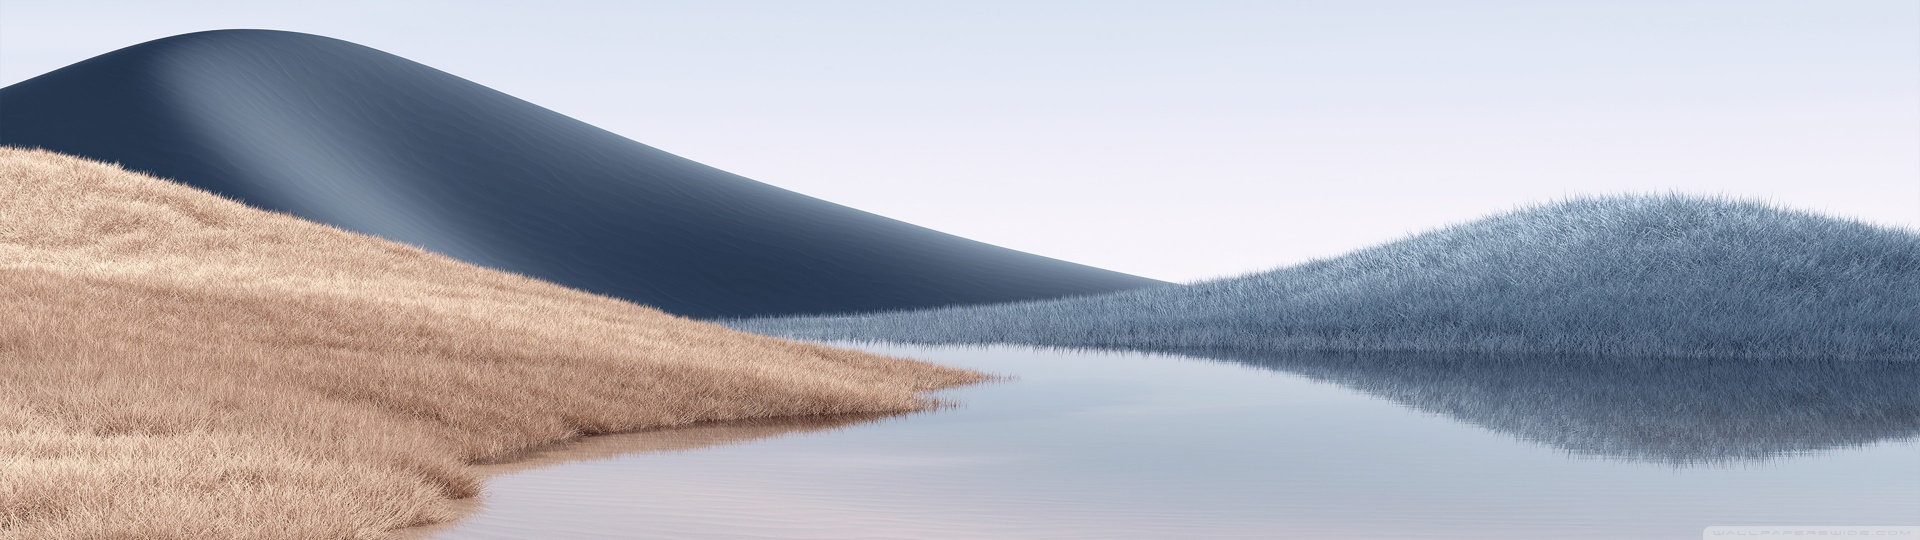 Water Ultra HD Desktop Background Wallpaper for : Widescreen ...